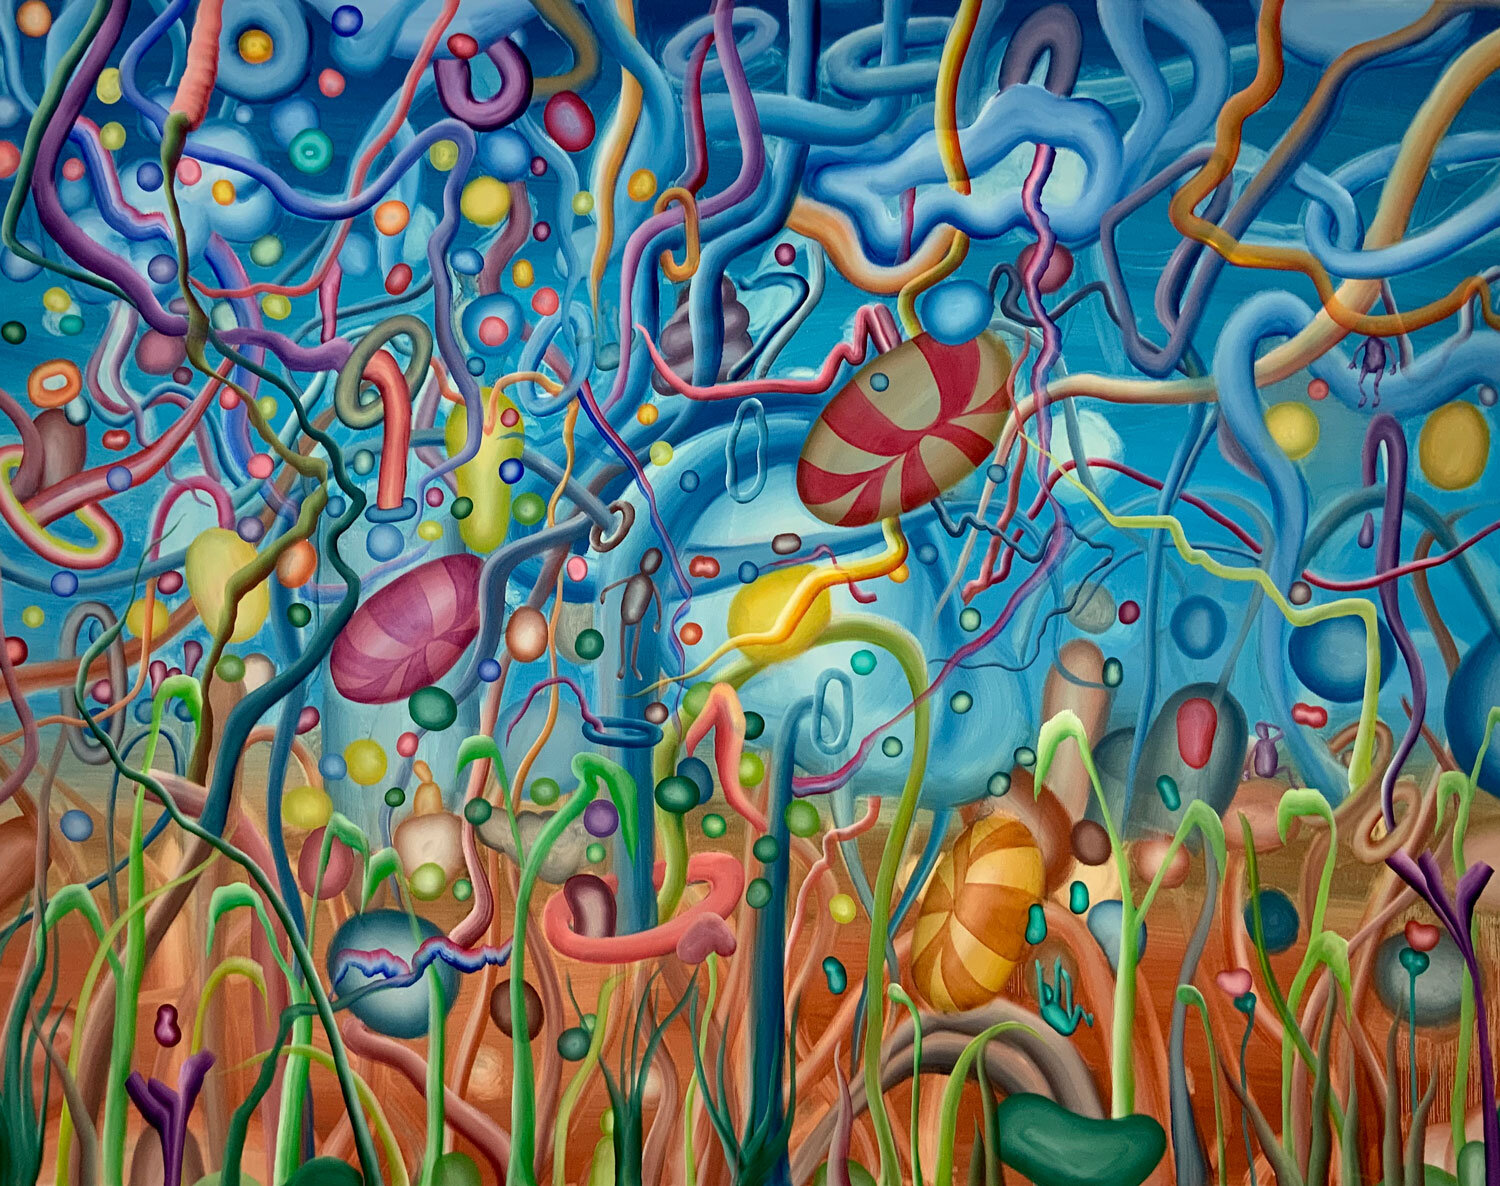 Jardín de sueños, óleo sobre lienzo, 114x146 cms, 2018